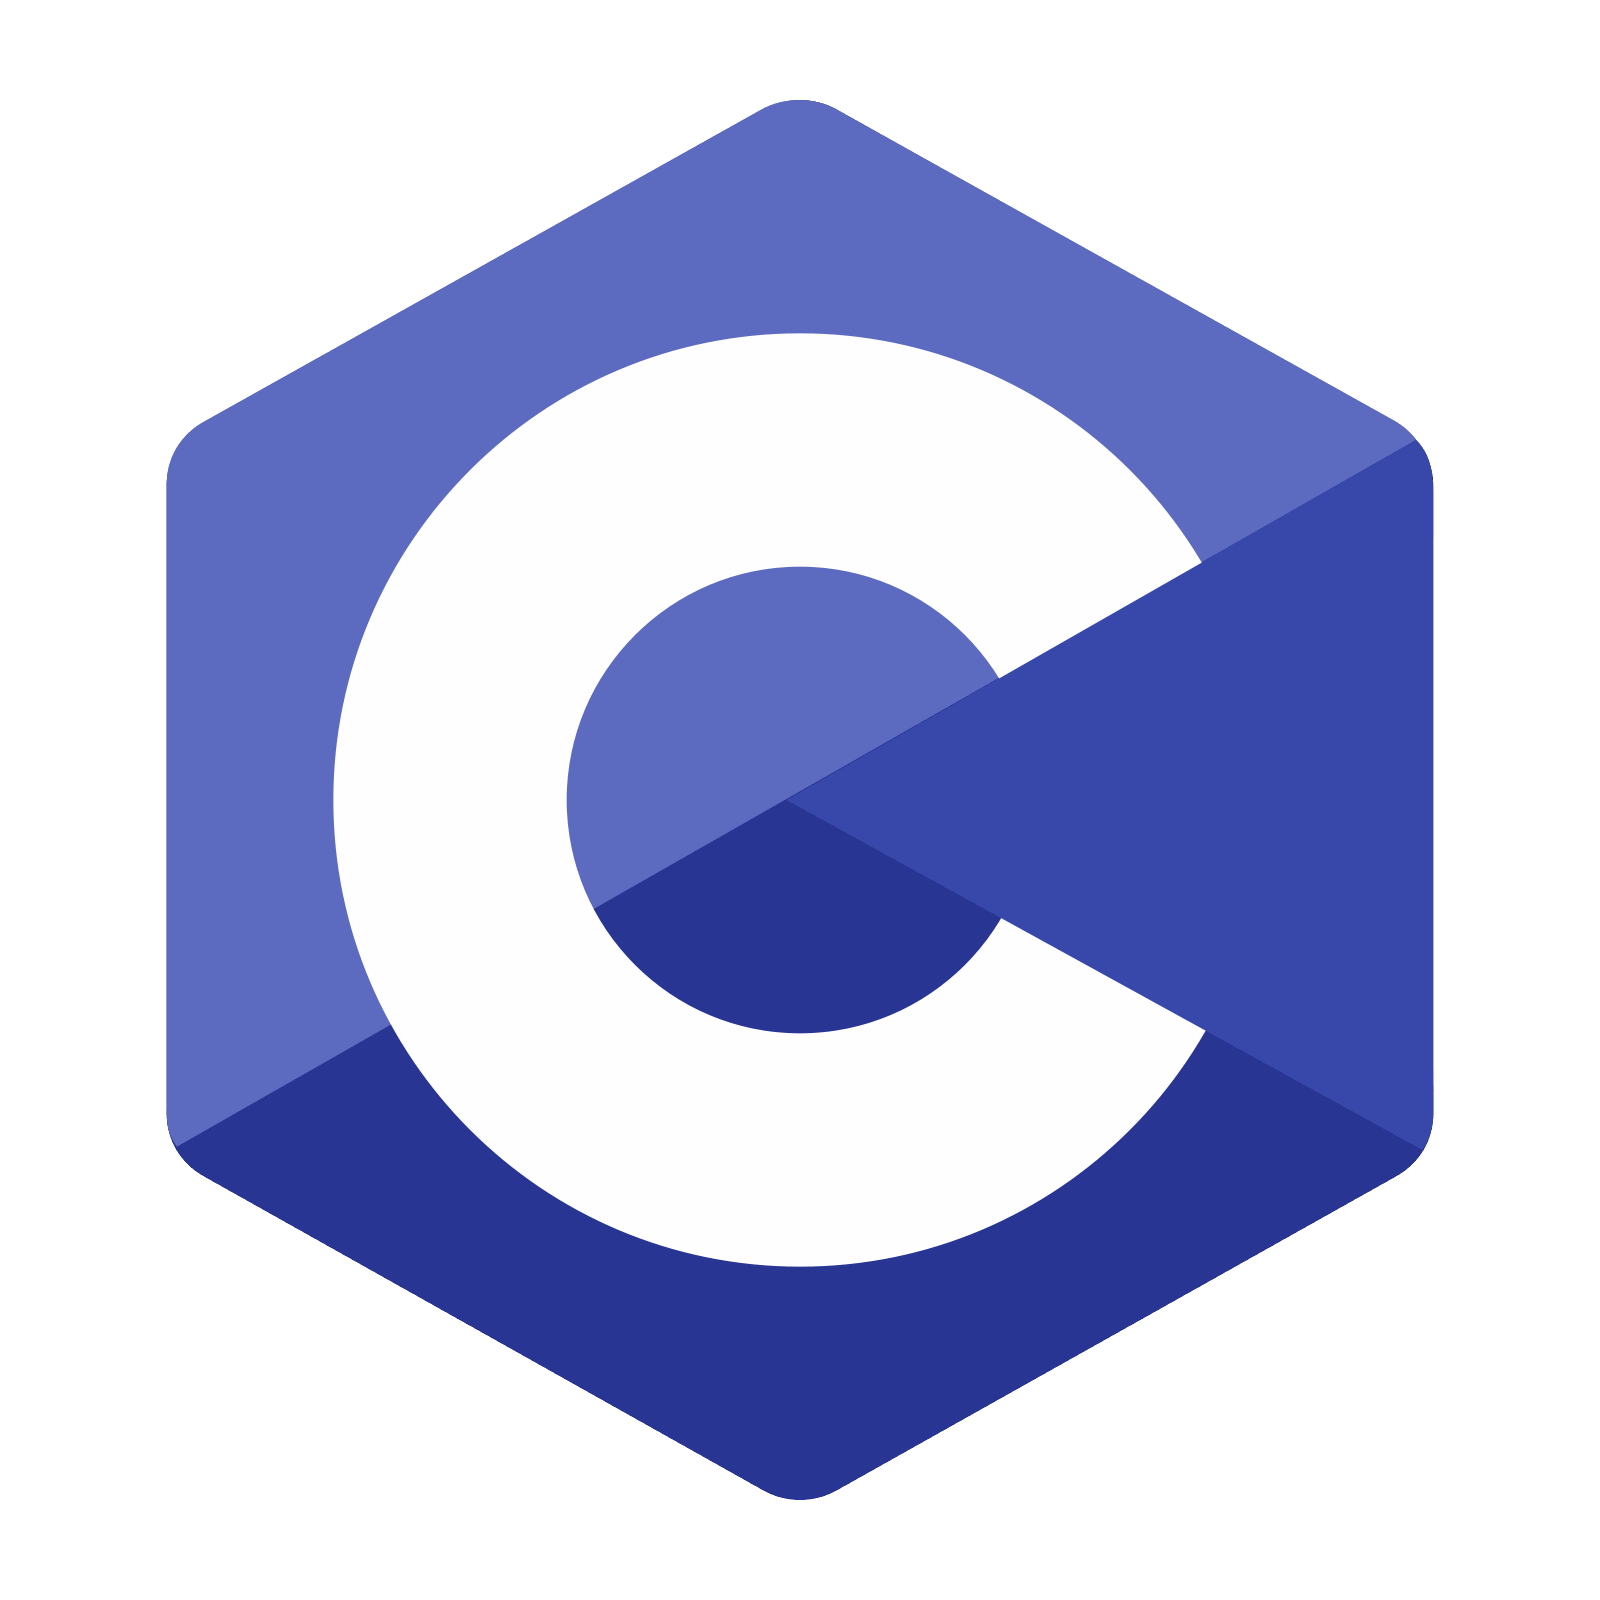 c-programming